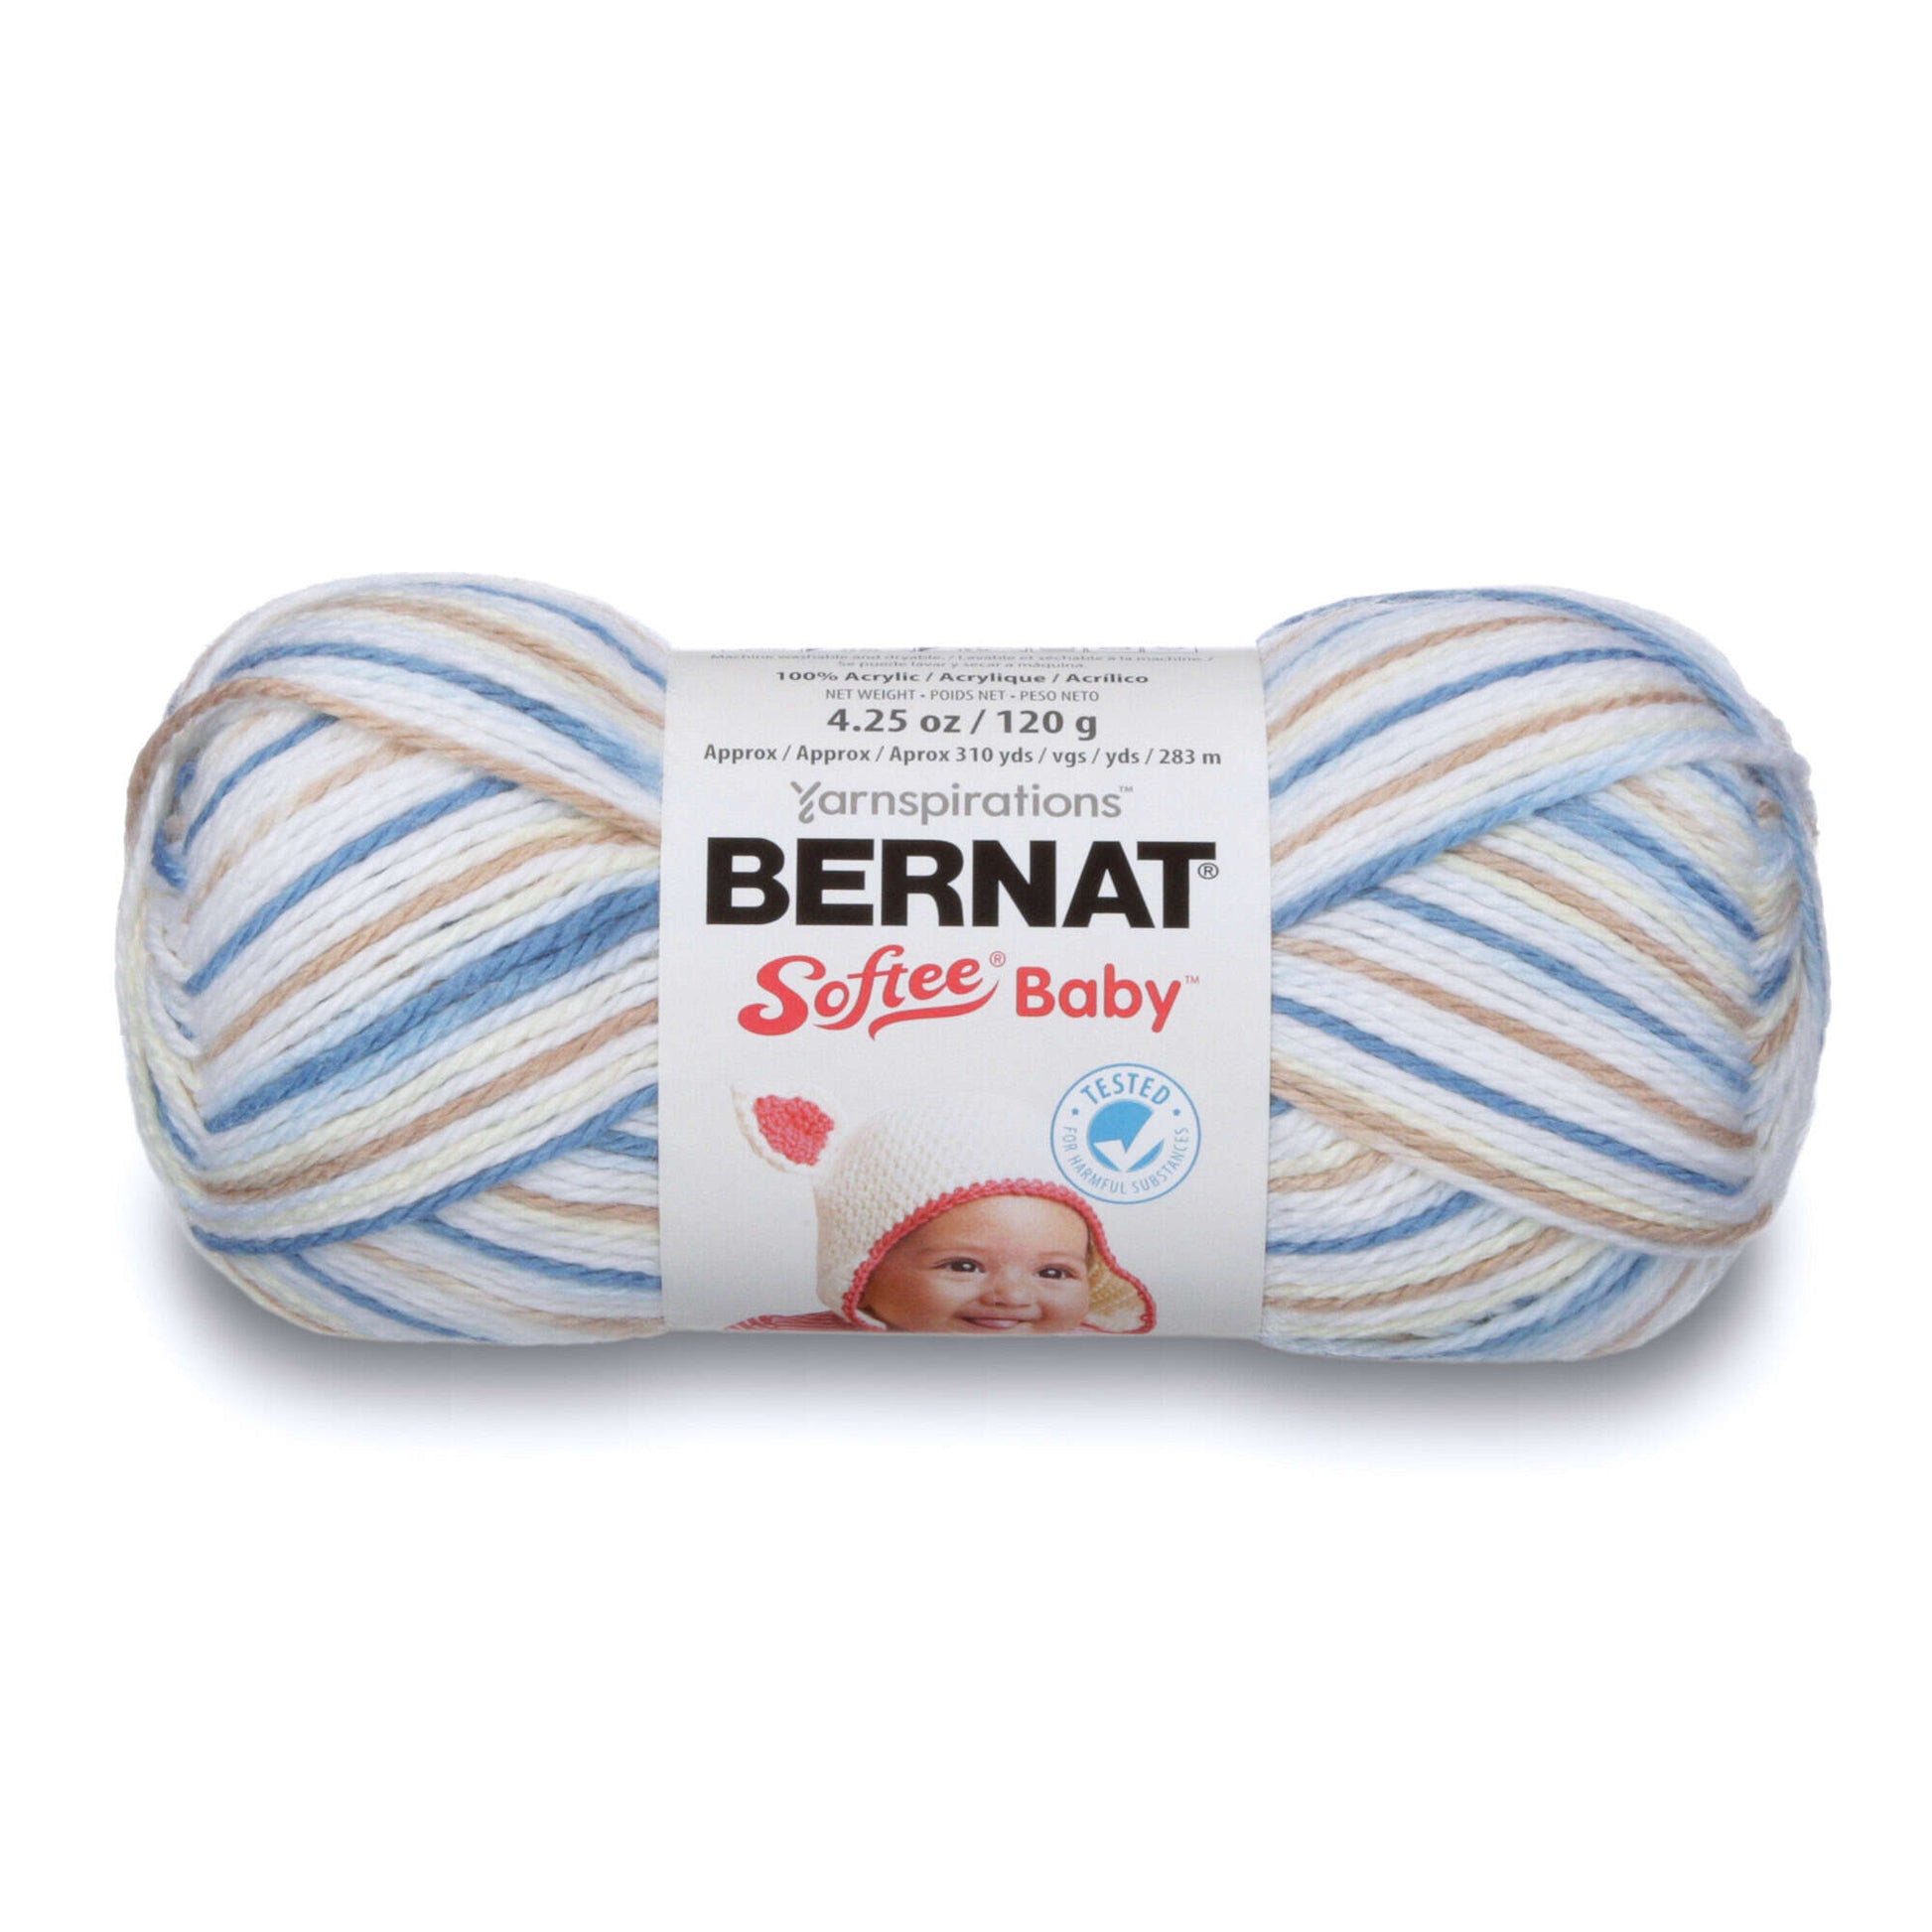 Bernat Softee Baby Variegates Yarn